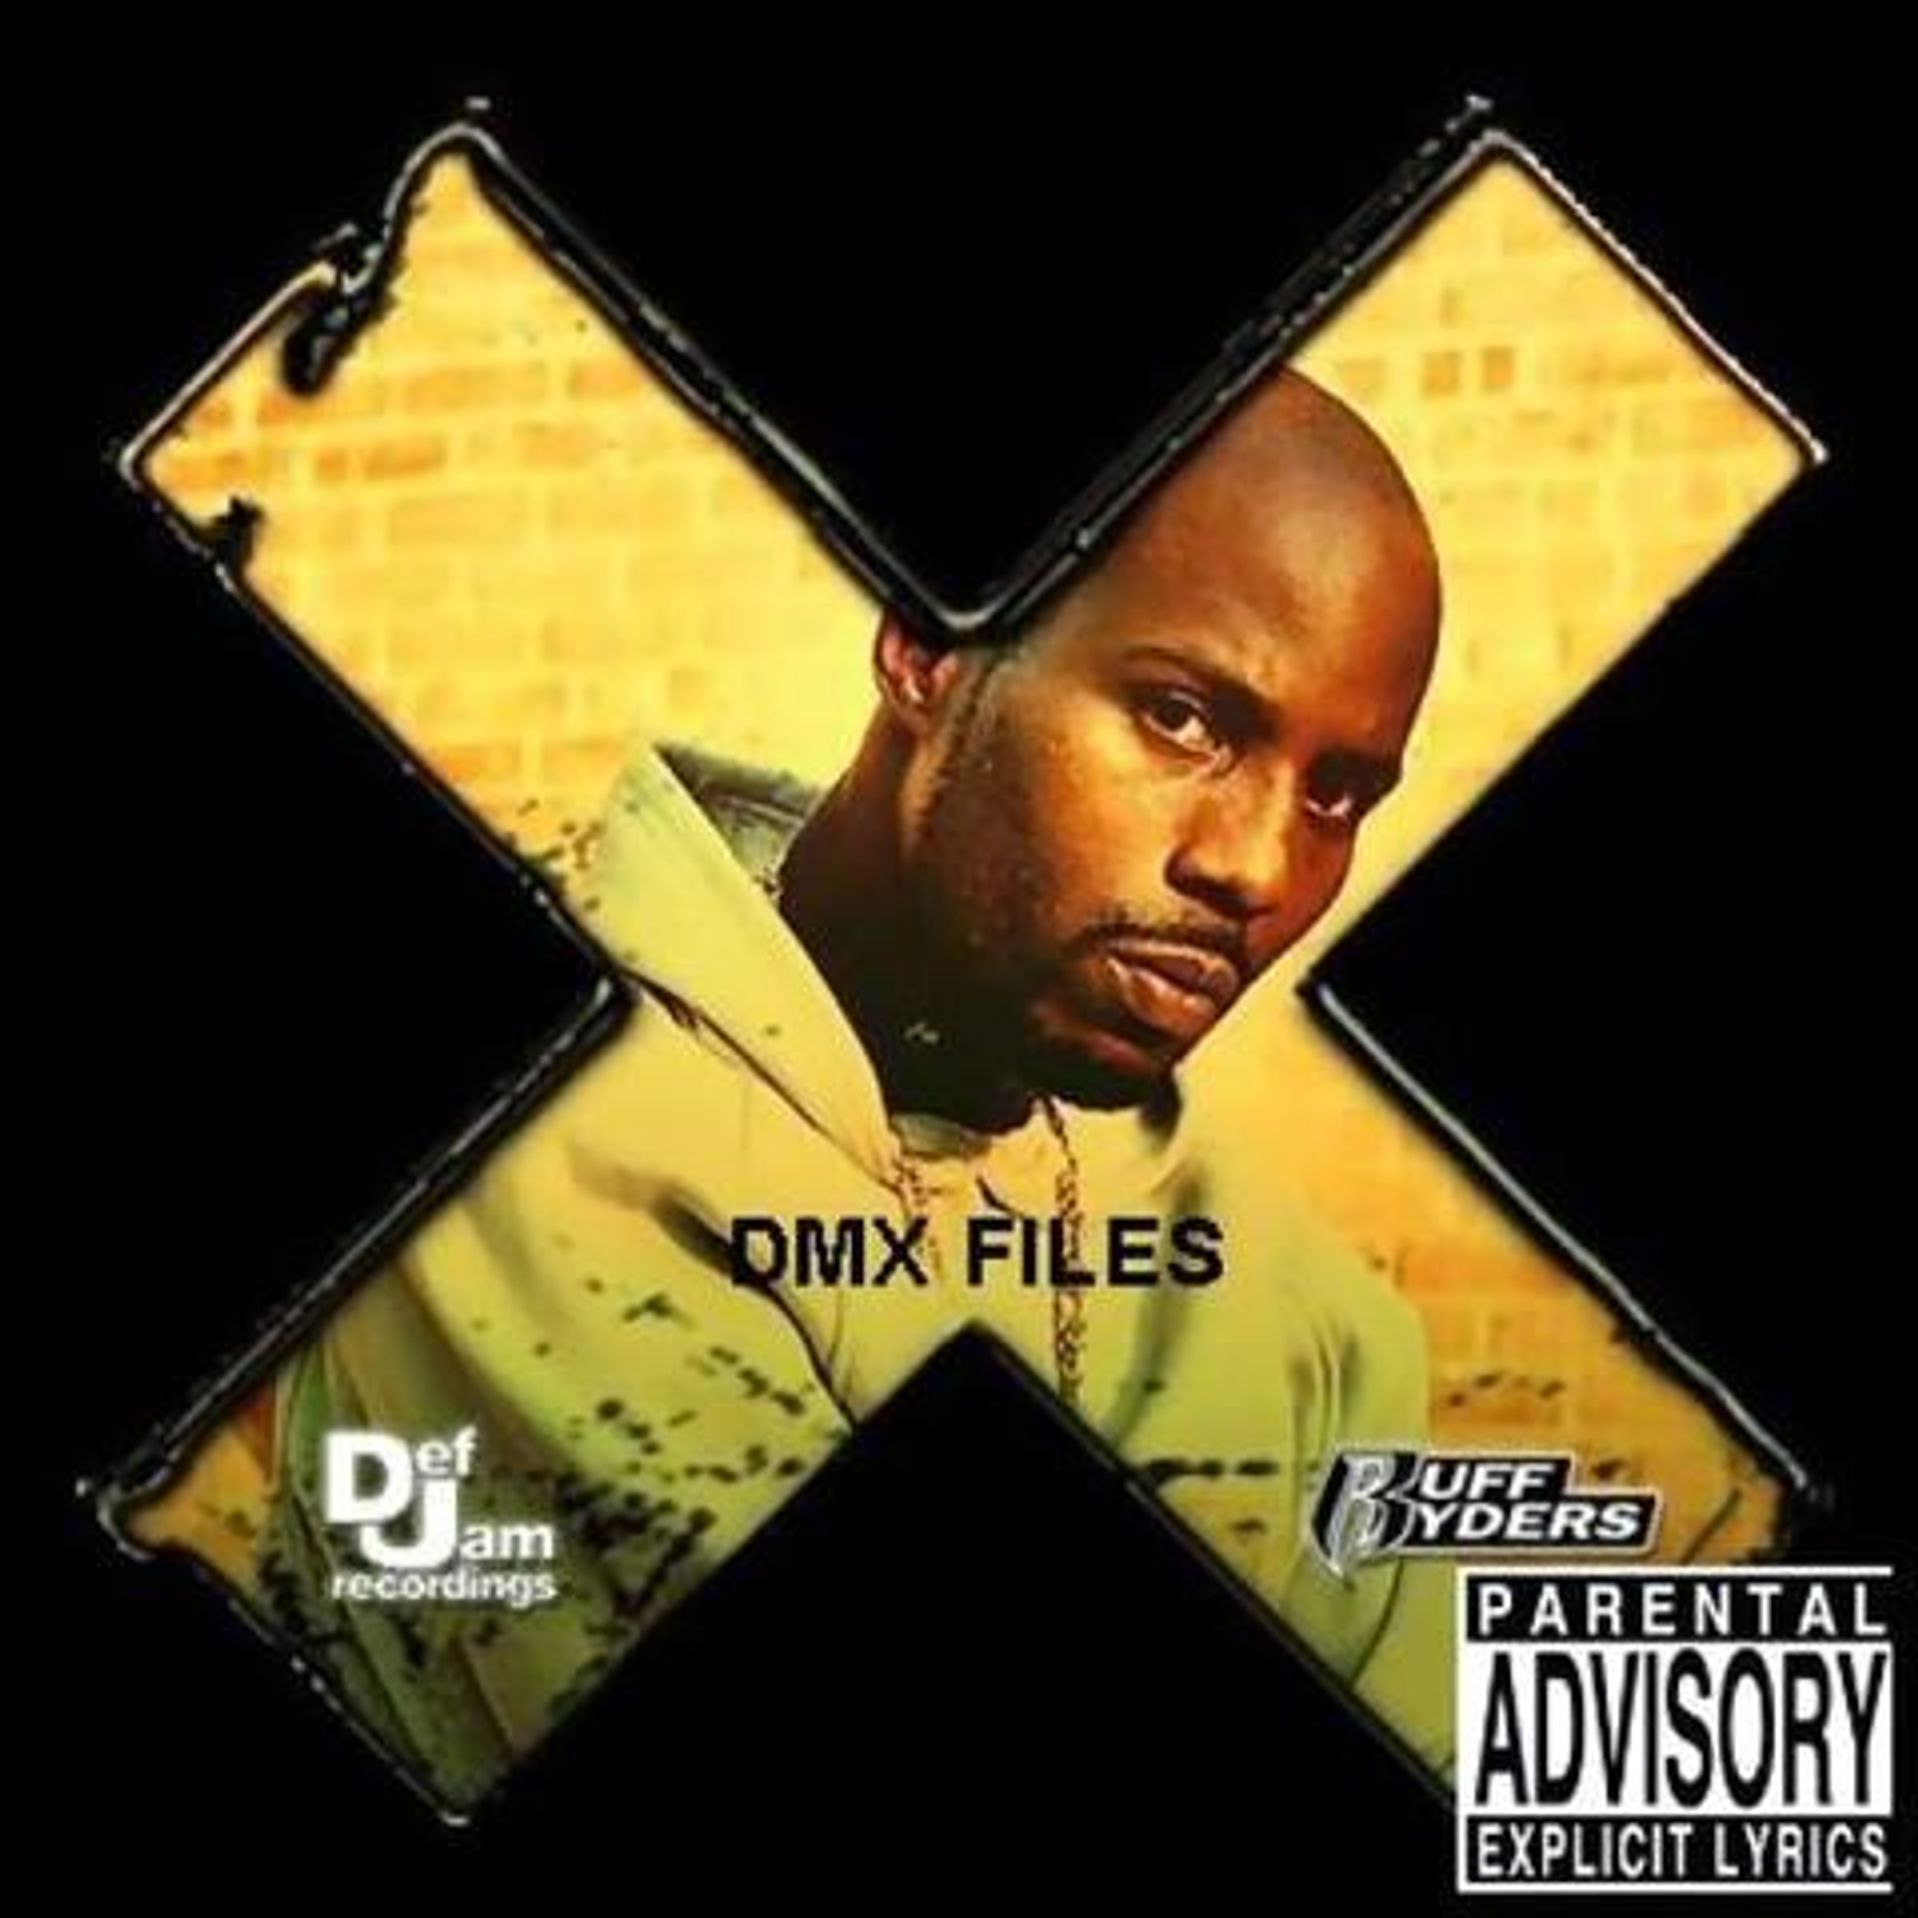 Album Title: The X Files by: DMX